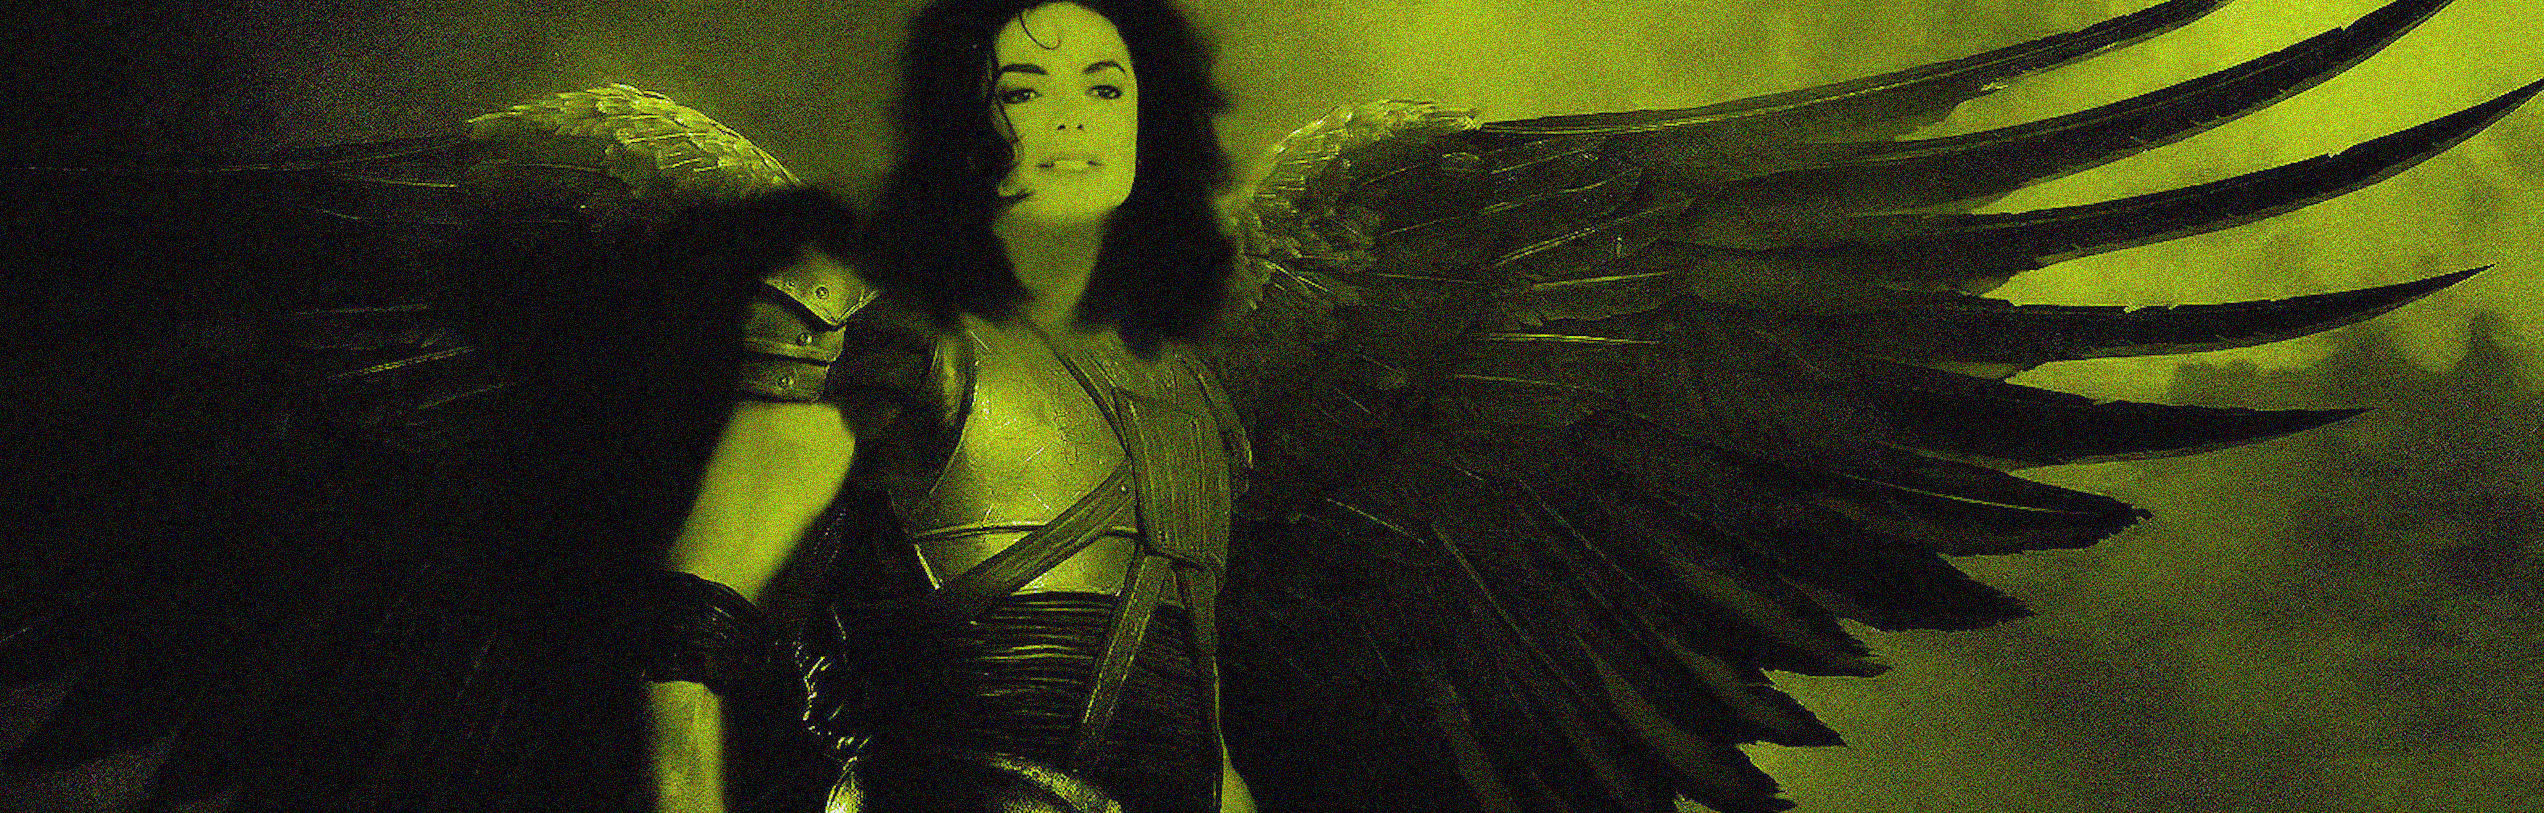 Michael Jackson Image Archangel HD Wallpaper And